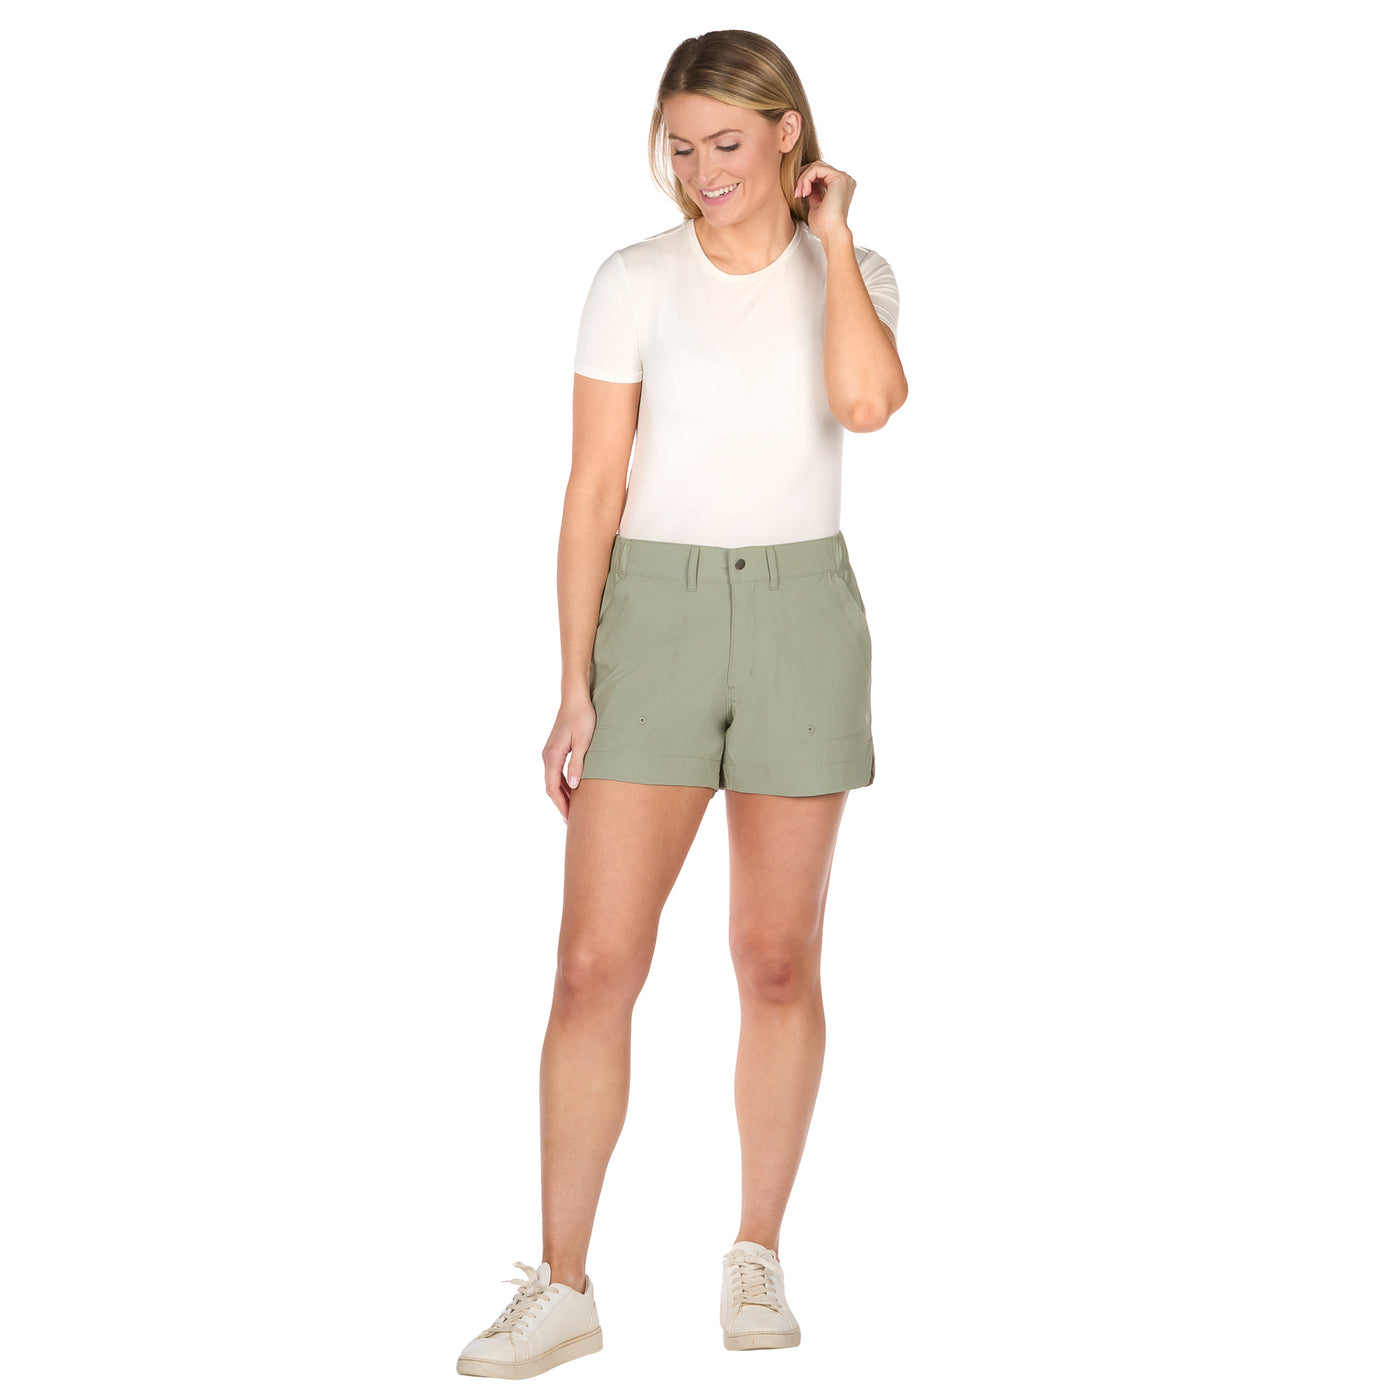 Women's Curved Hem 4" Shorts